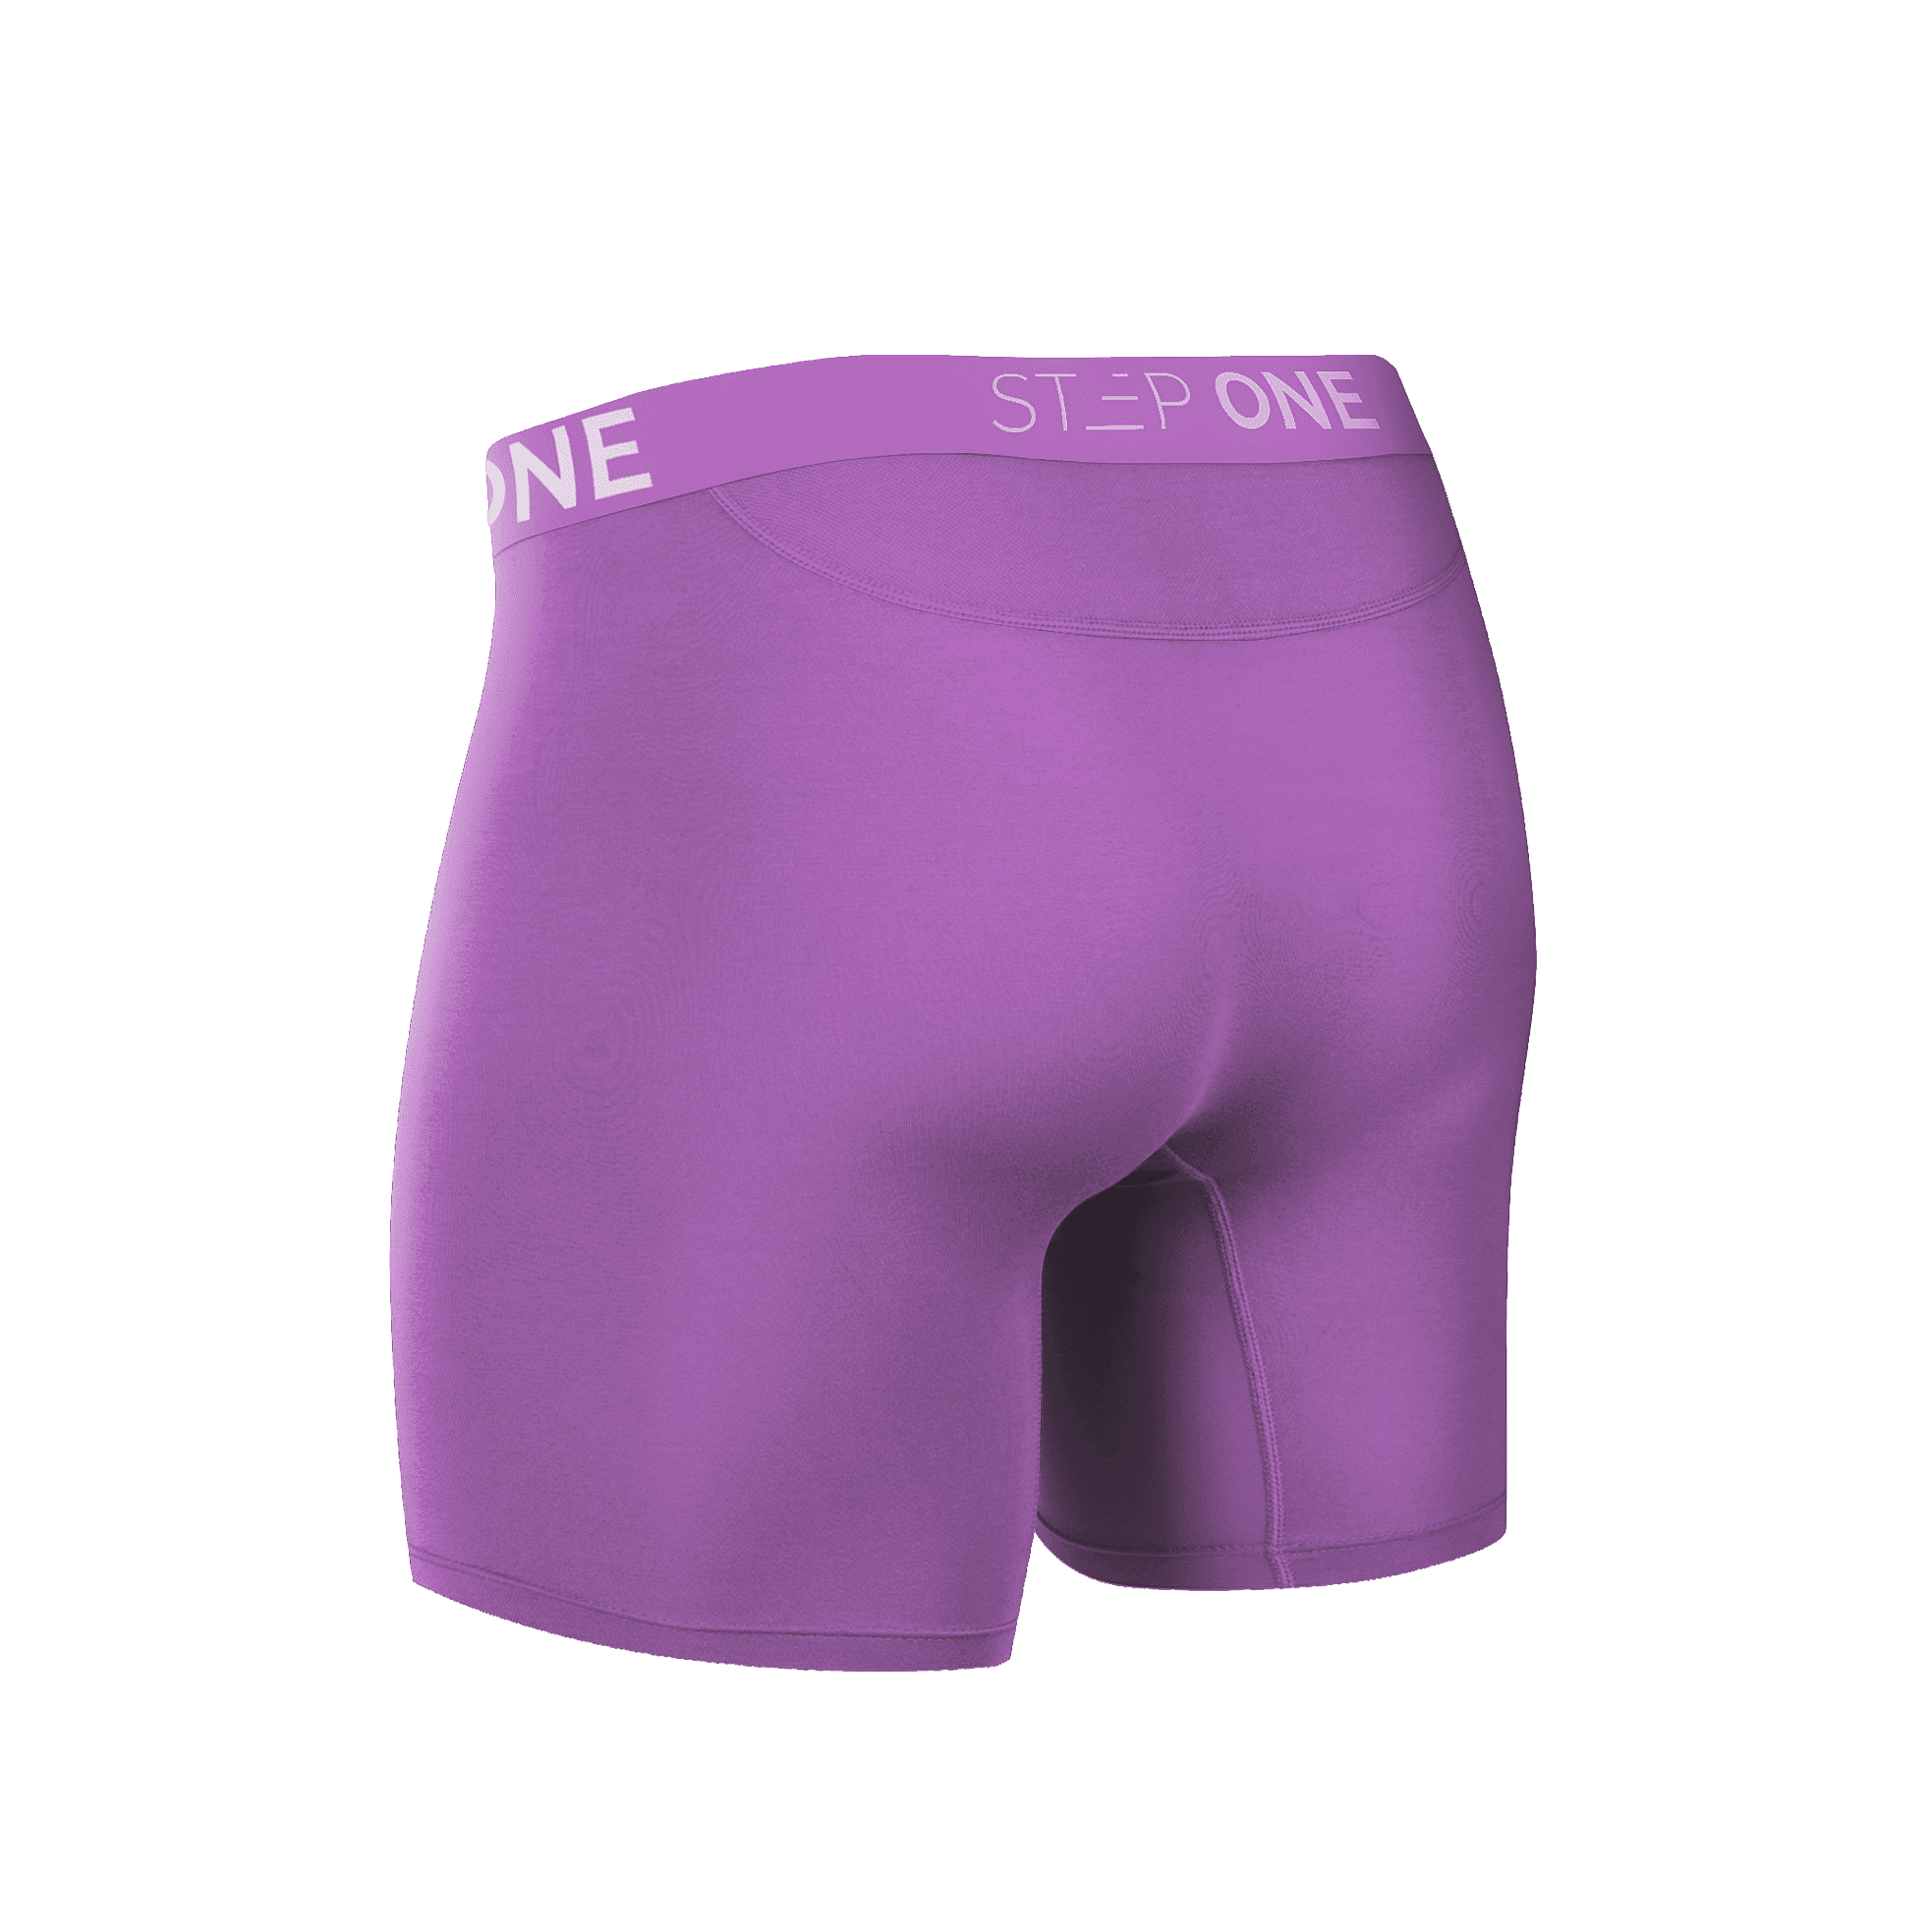  Buy Men's Underwear Online at Step One UK